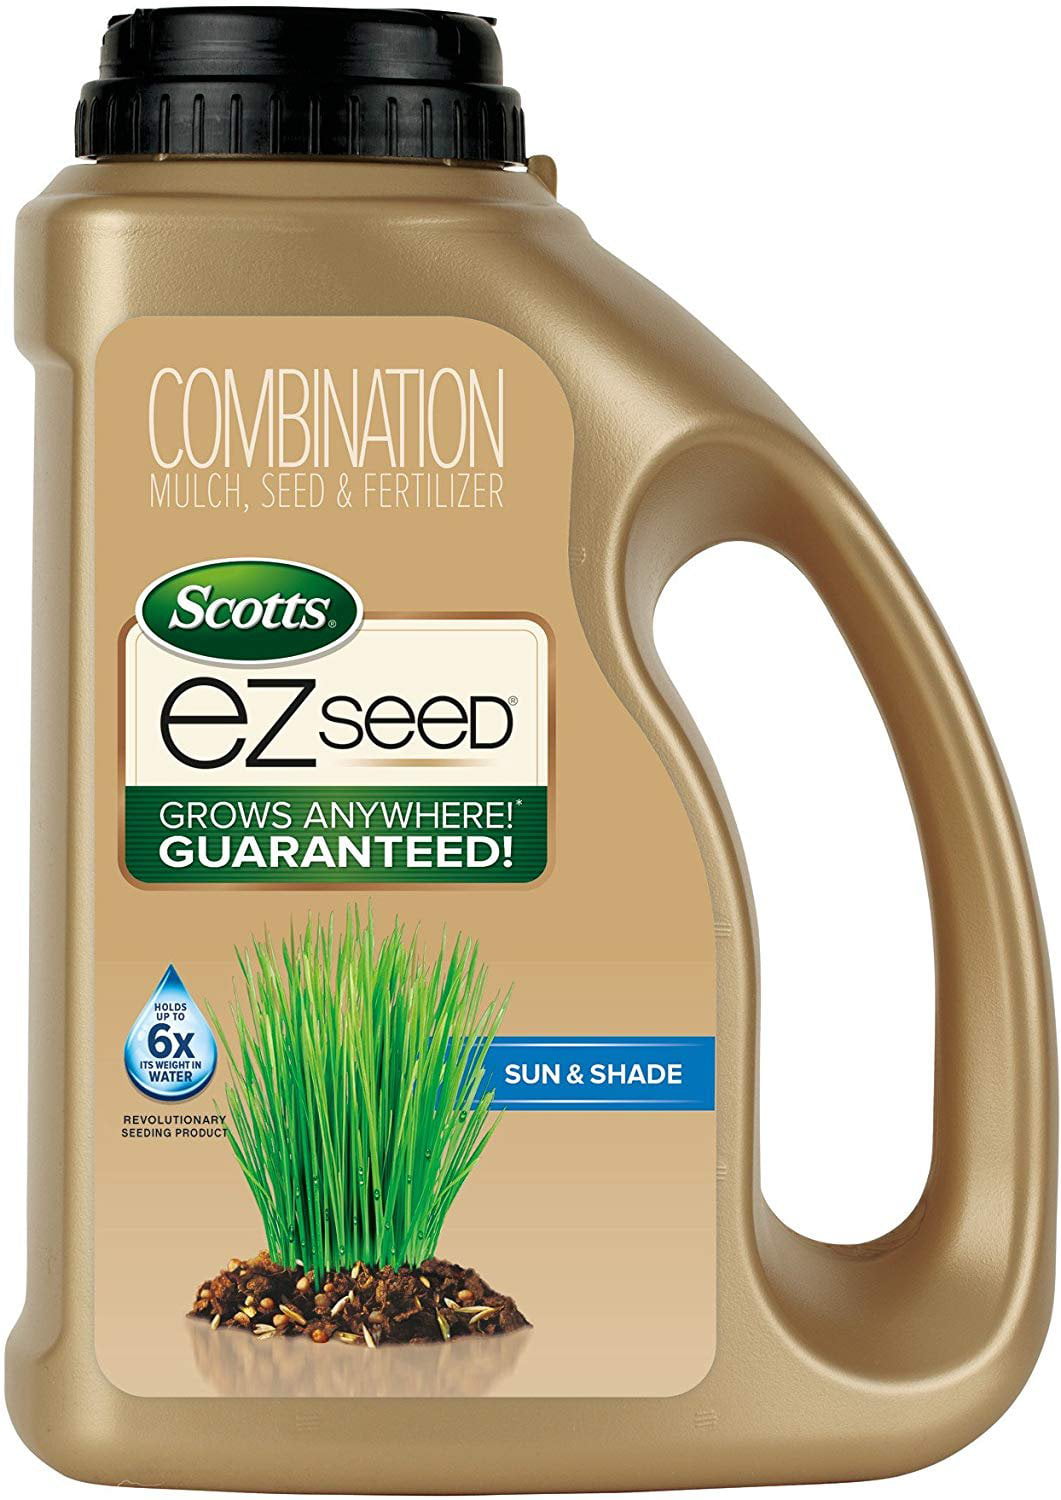 scotts-ez-seed-sun-and-shade-3-75-pound-grass-seed-mix-walmart